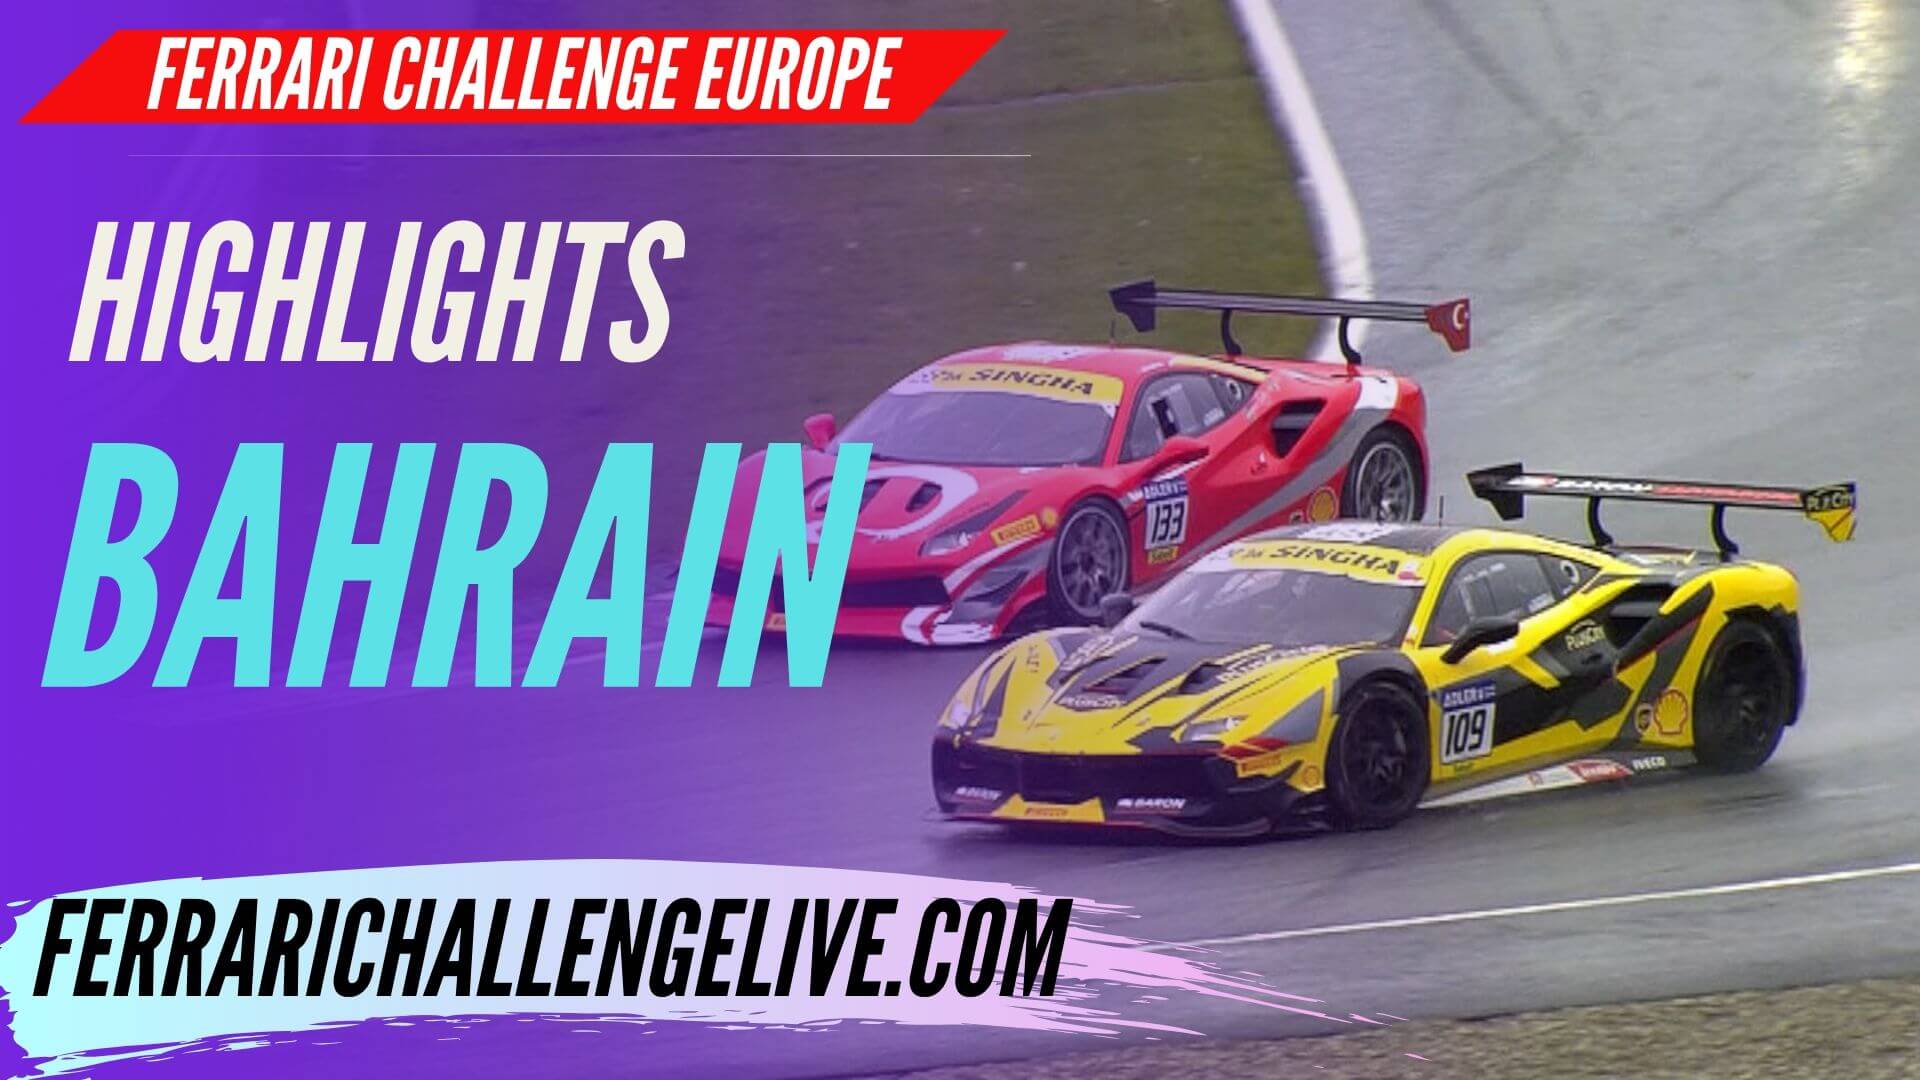 Bahrain Ferrari Challenge Europe Highlights 2019